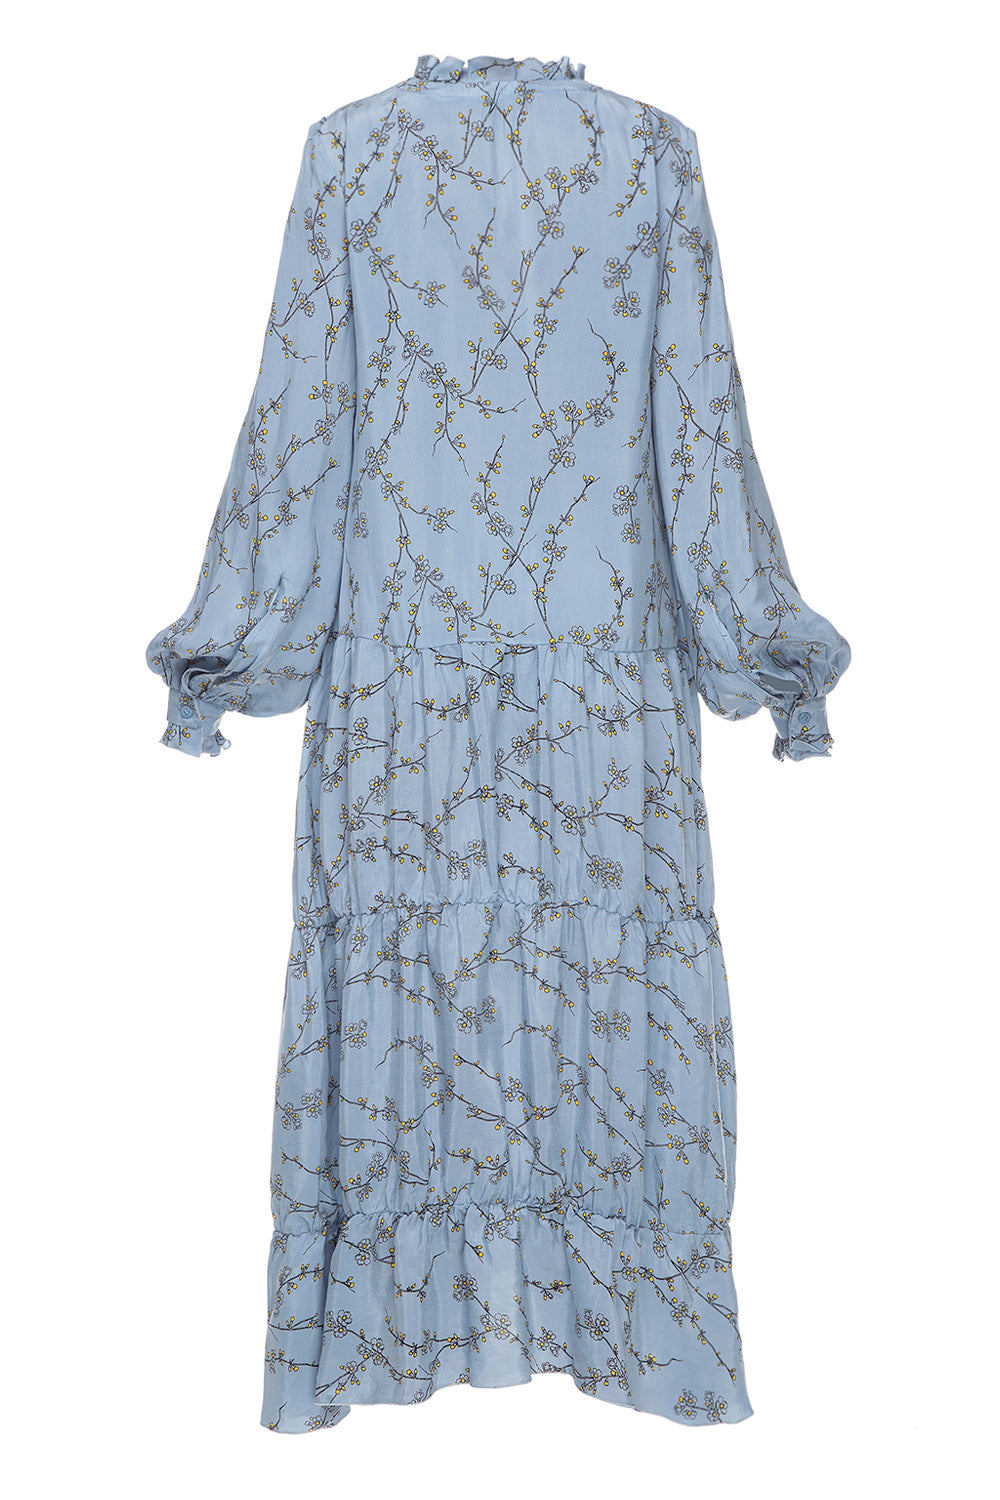 Blue floral printed dress